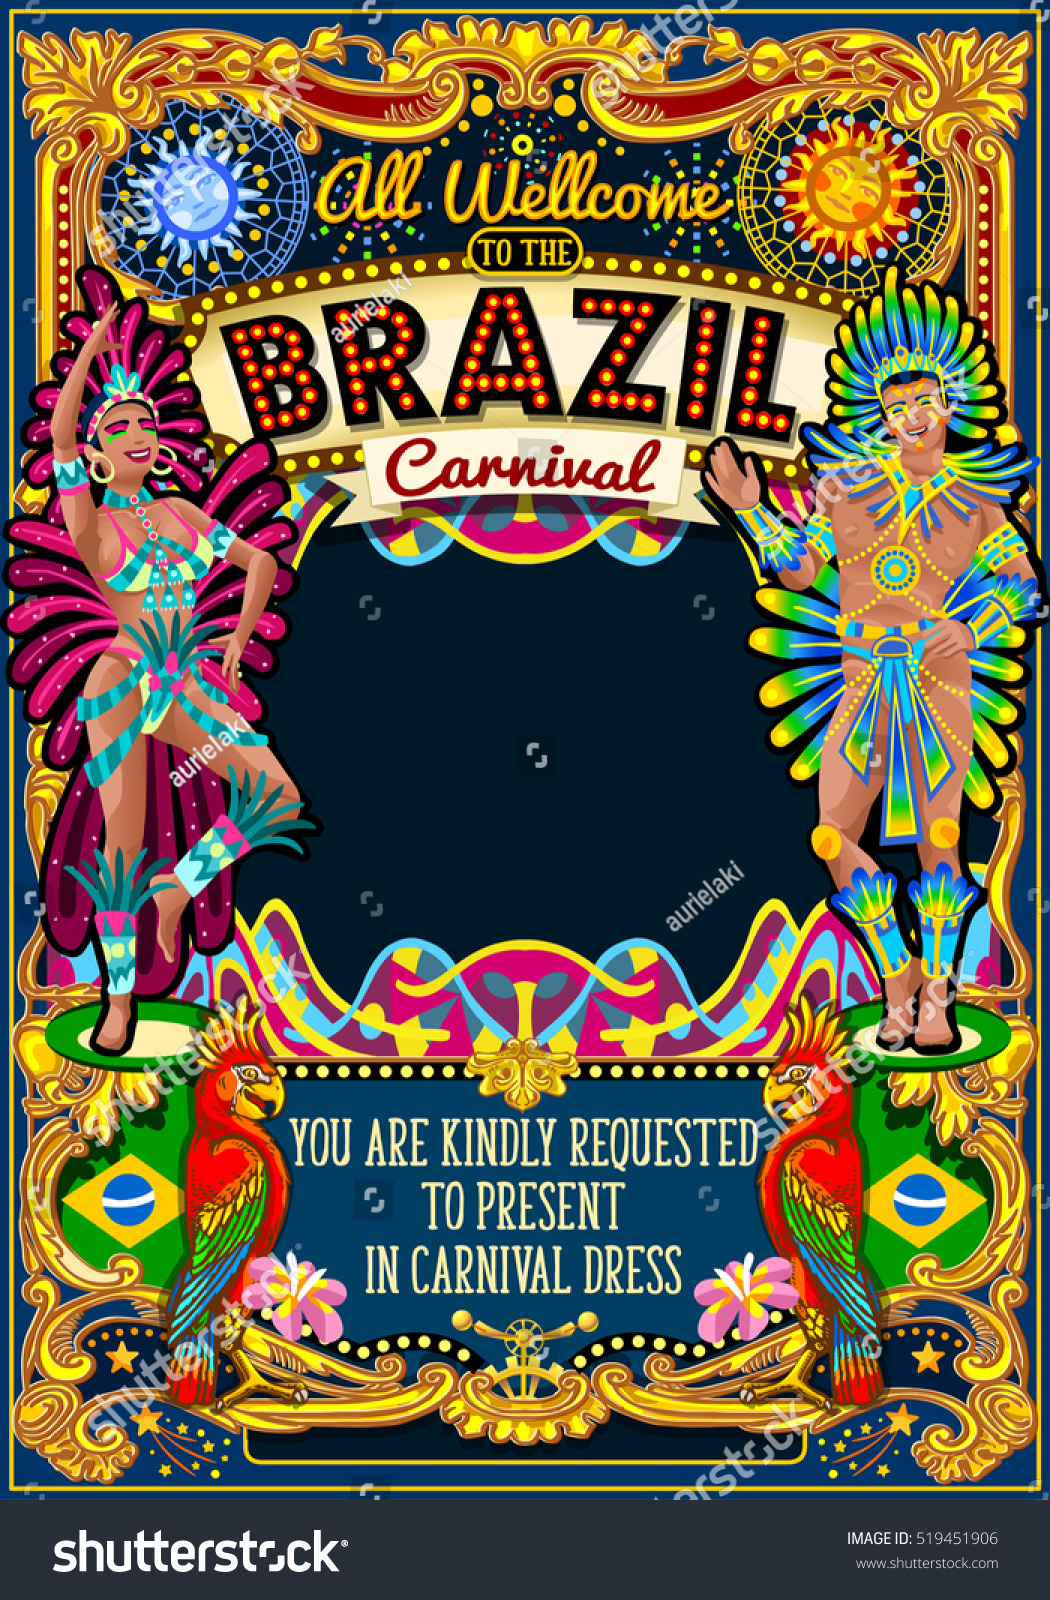 1,680 Brazil carnival float Images, Stock Photos & Vectors | Shutterstock